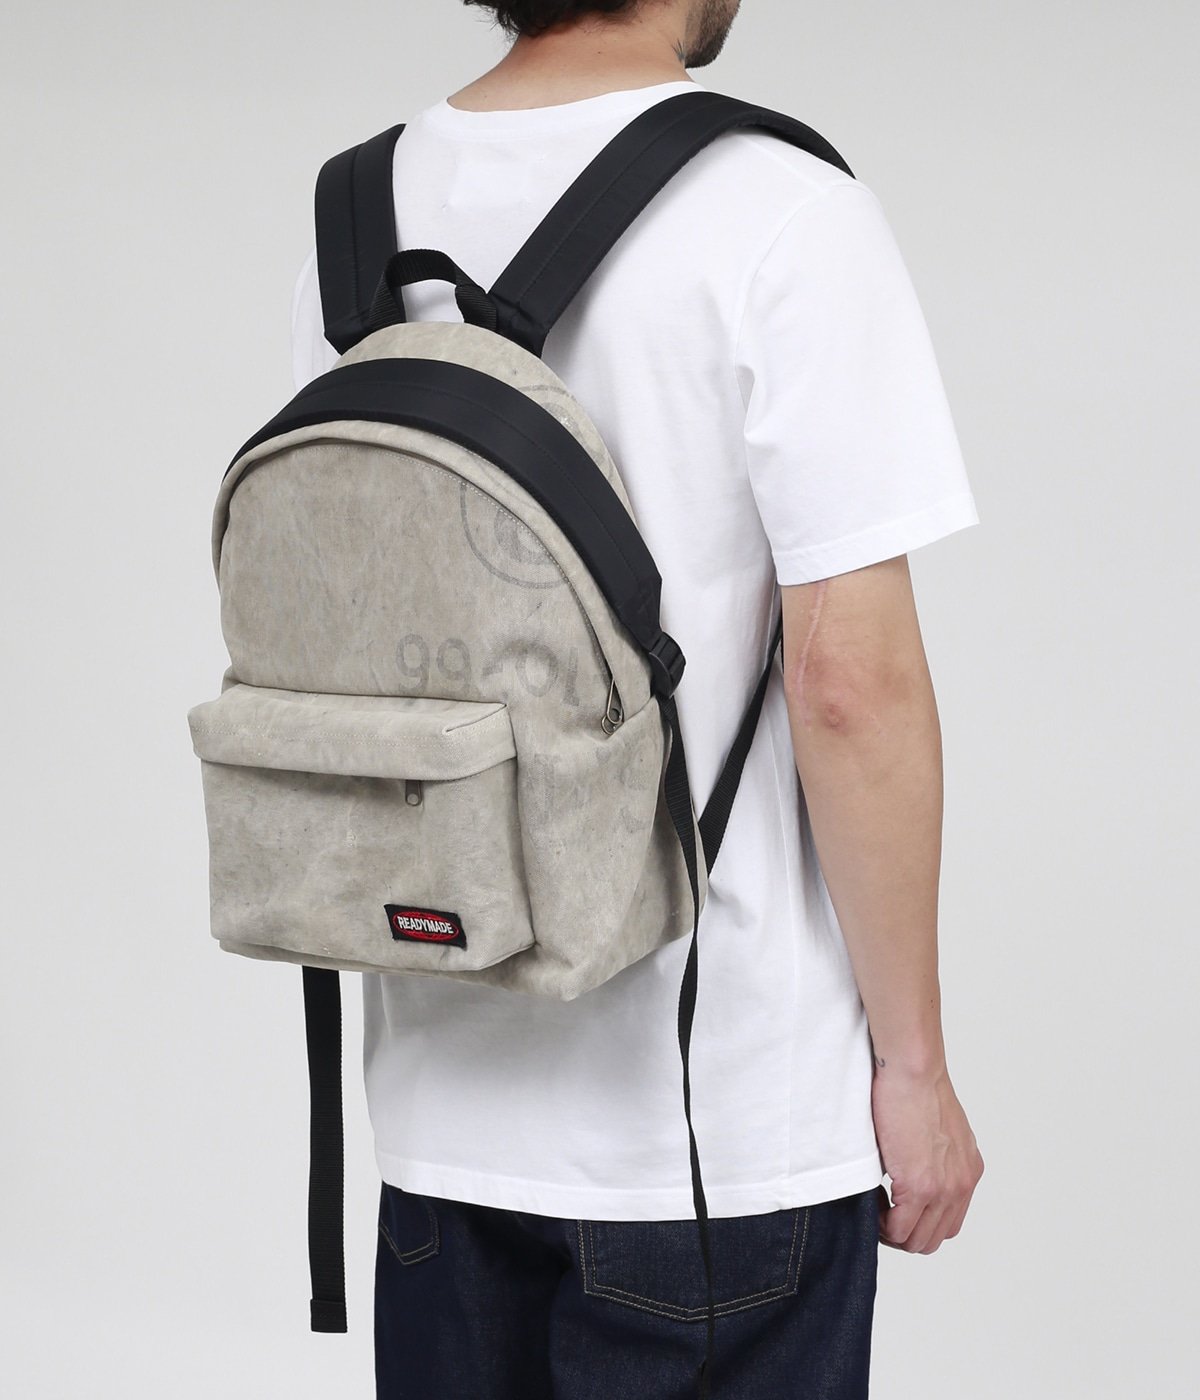 READYMADE Backpack WHITE 定価89100円 レディメイド